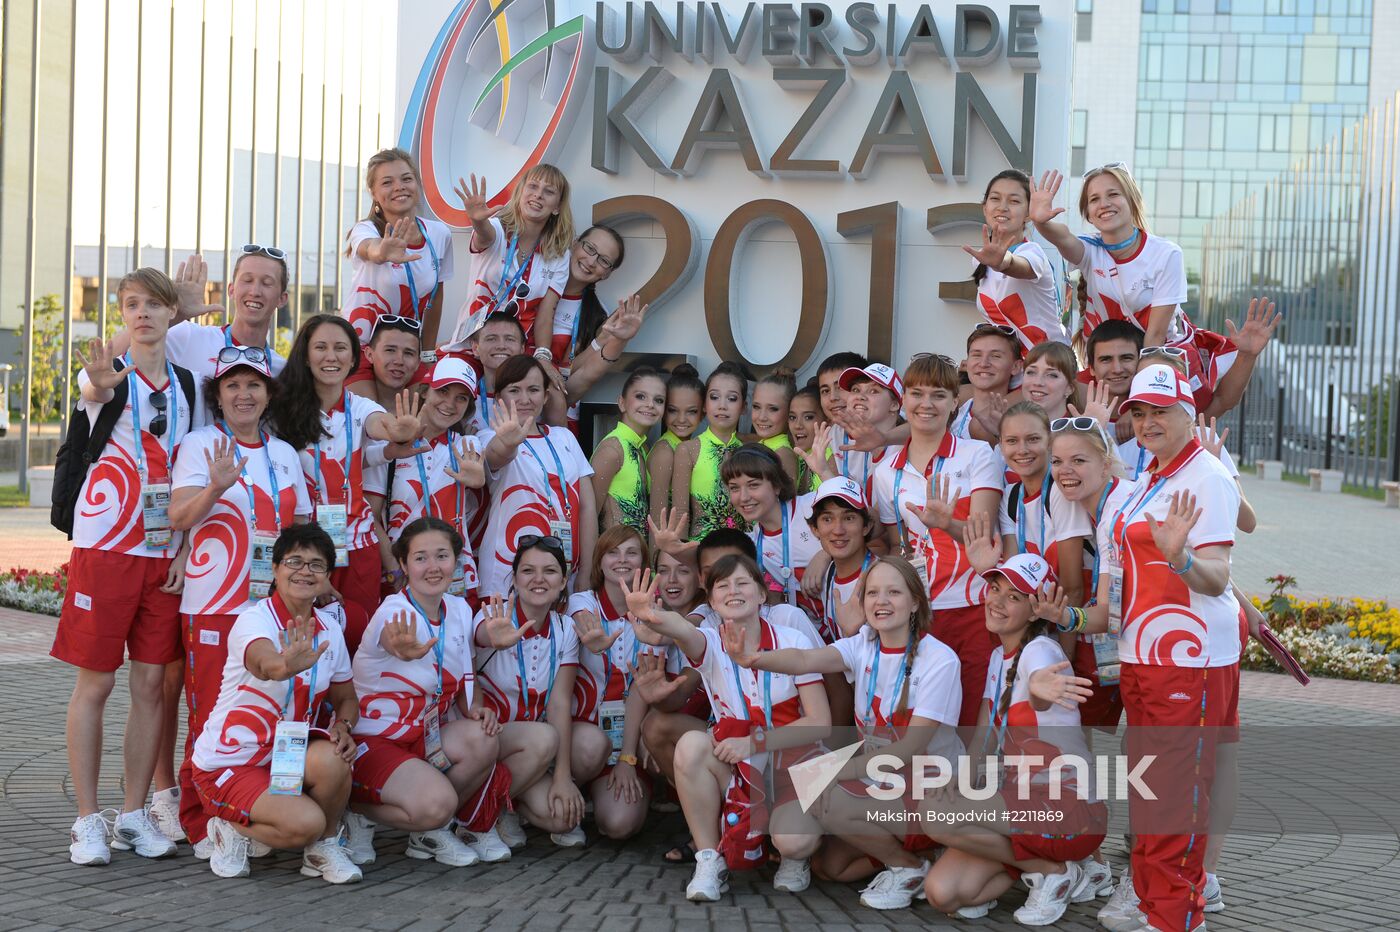 Opening ceremony of 2013 Universiade Village in Kazan